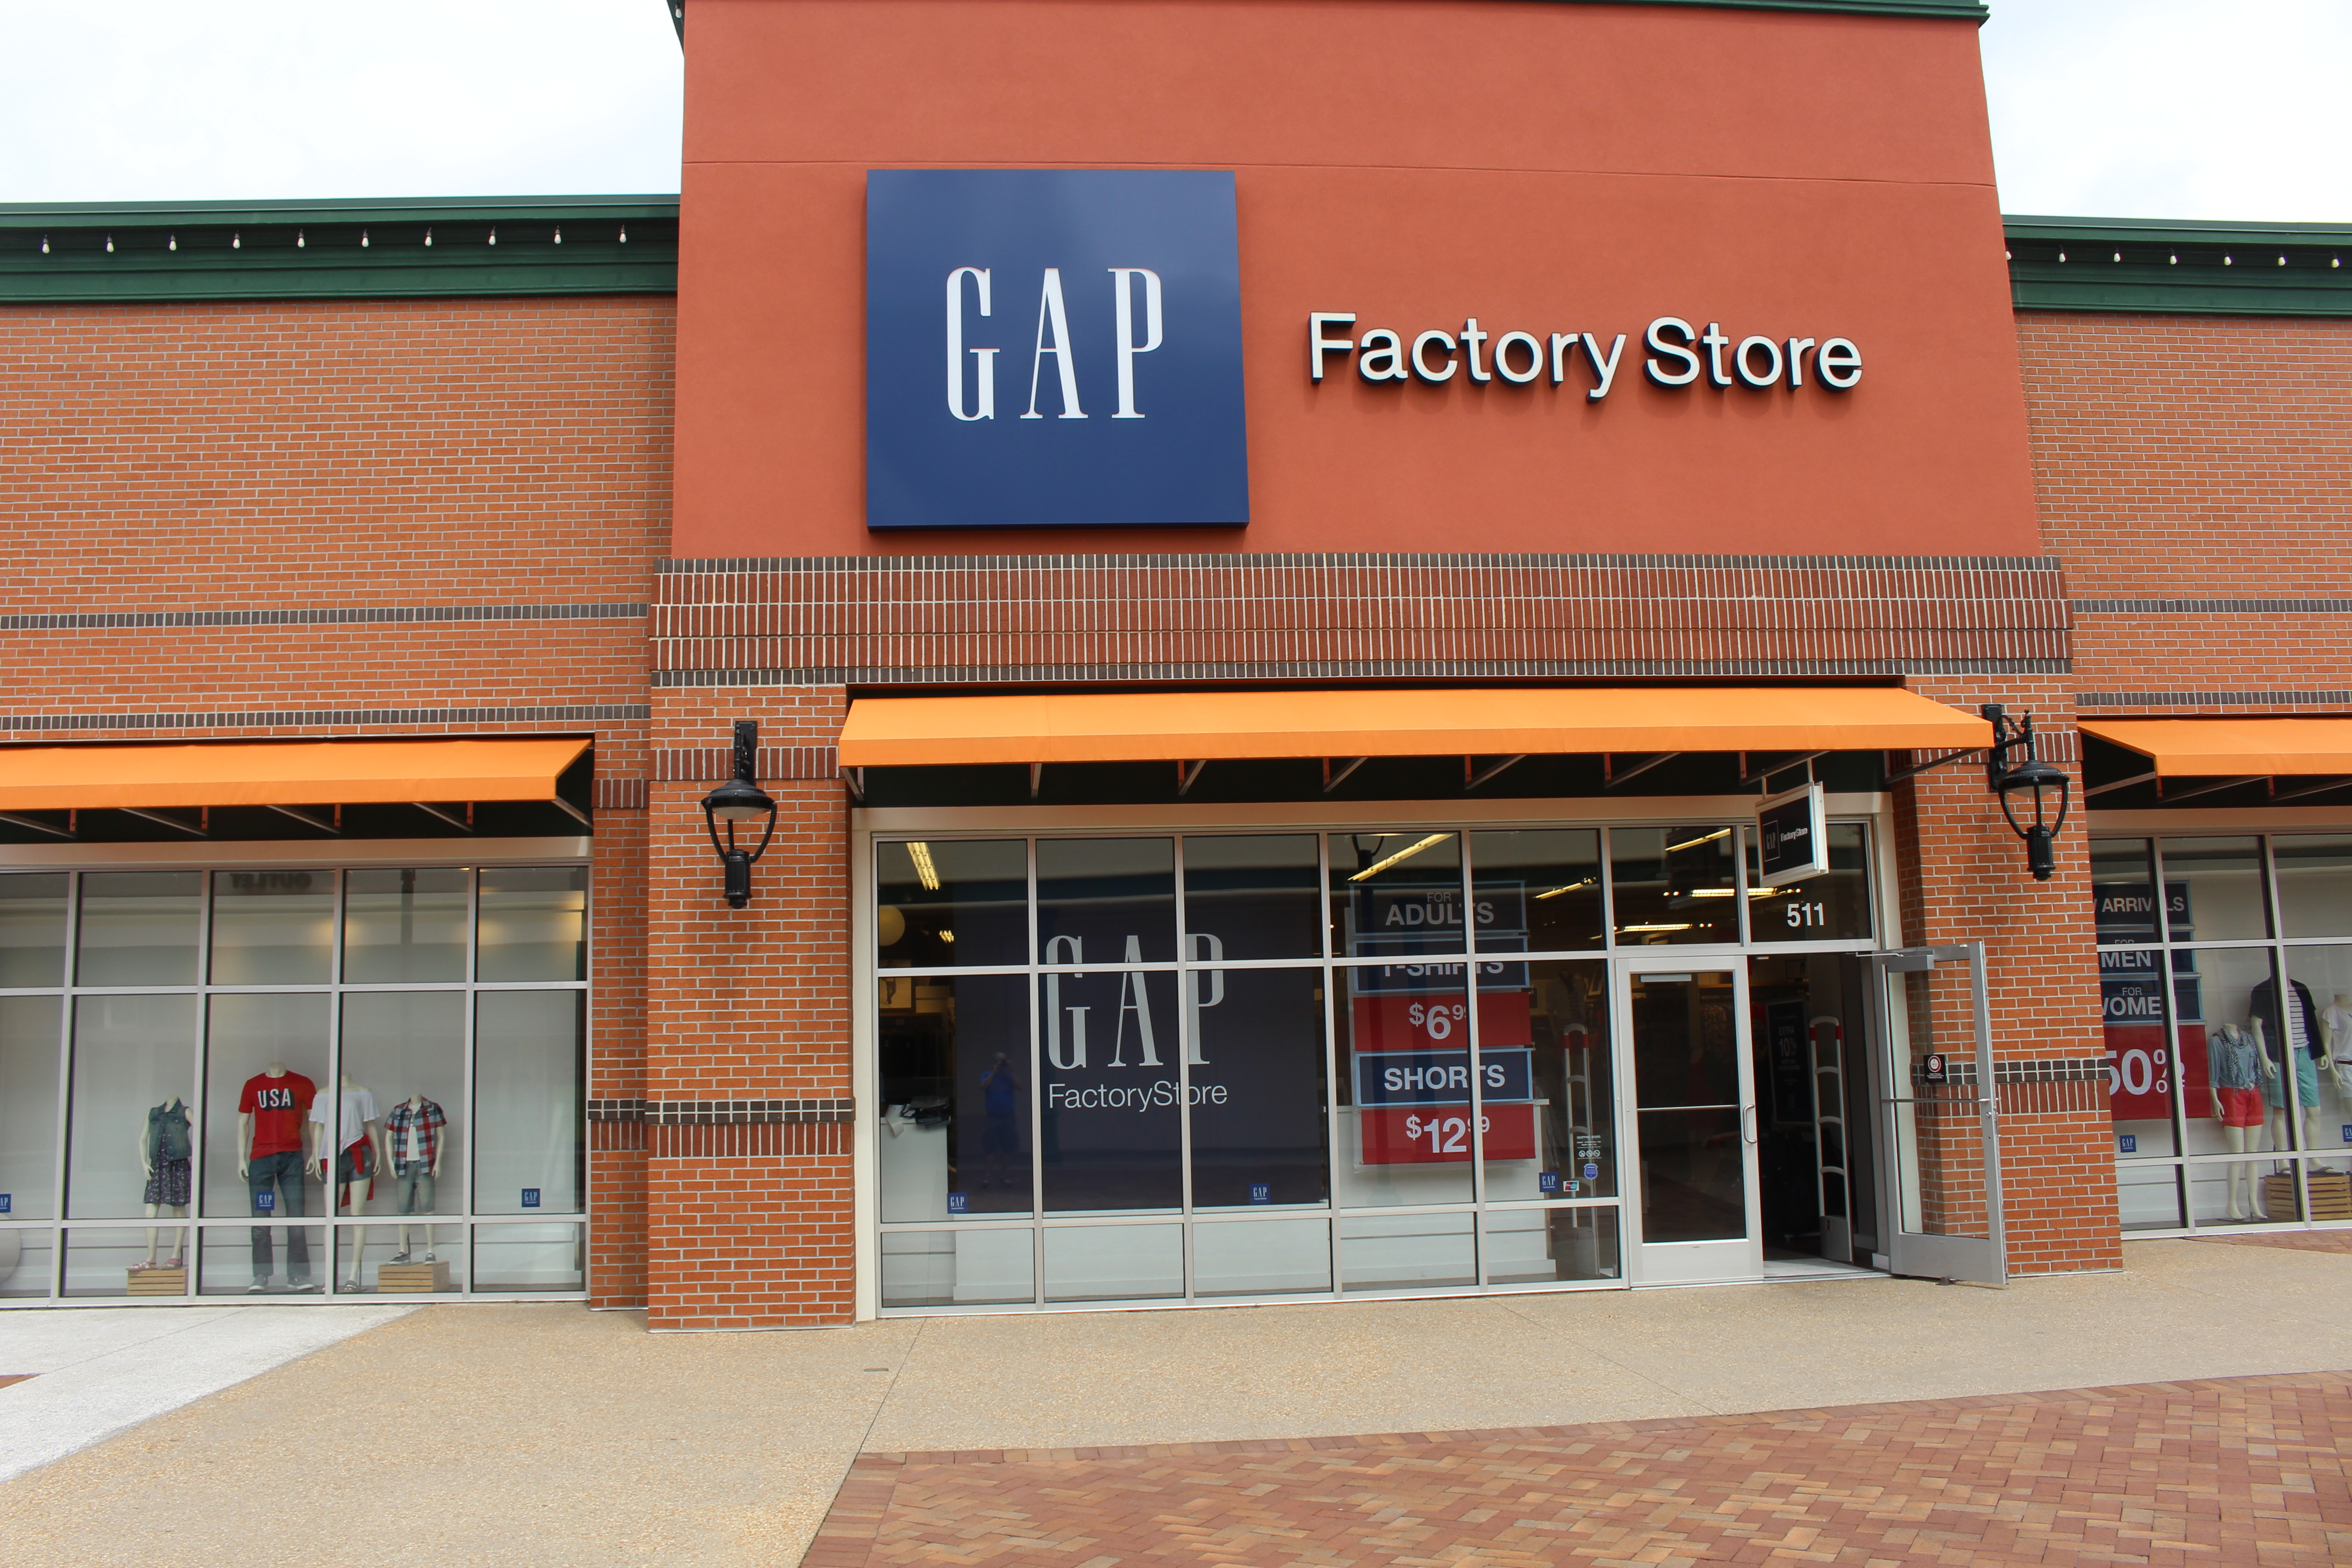 File:Gap Factory Store, Tanger Outlets Savannah.jpg - Wikimedia